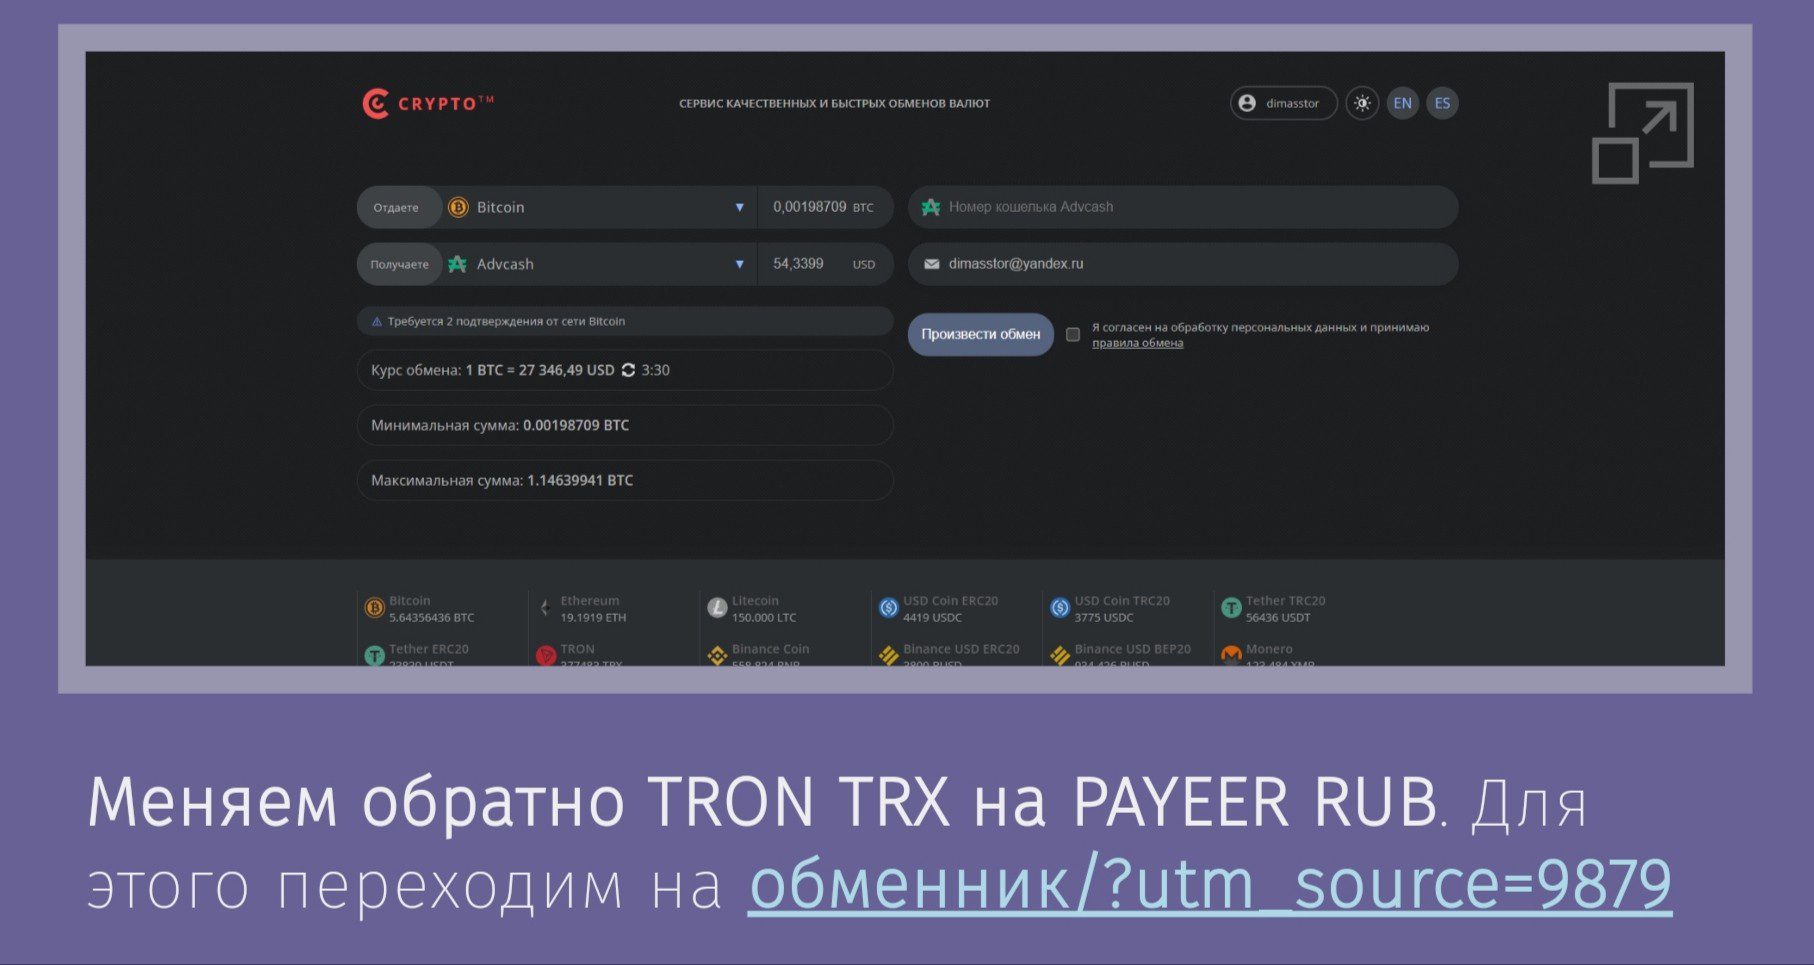 P2p-ru site обзор